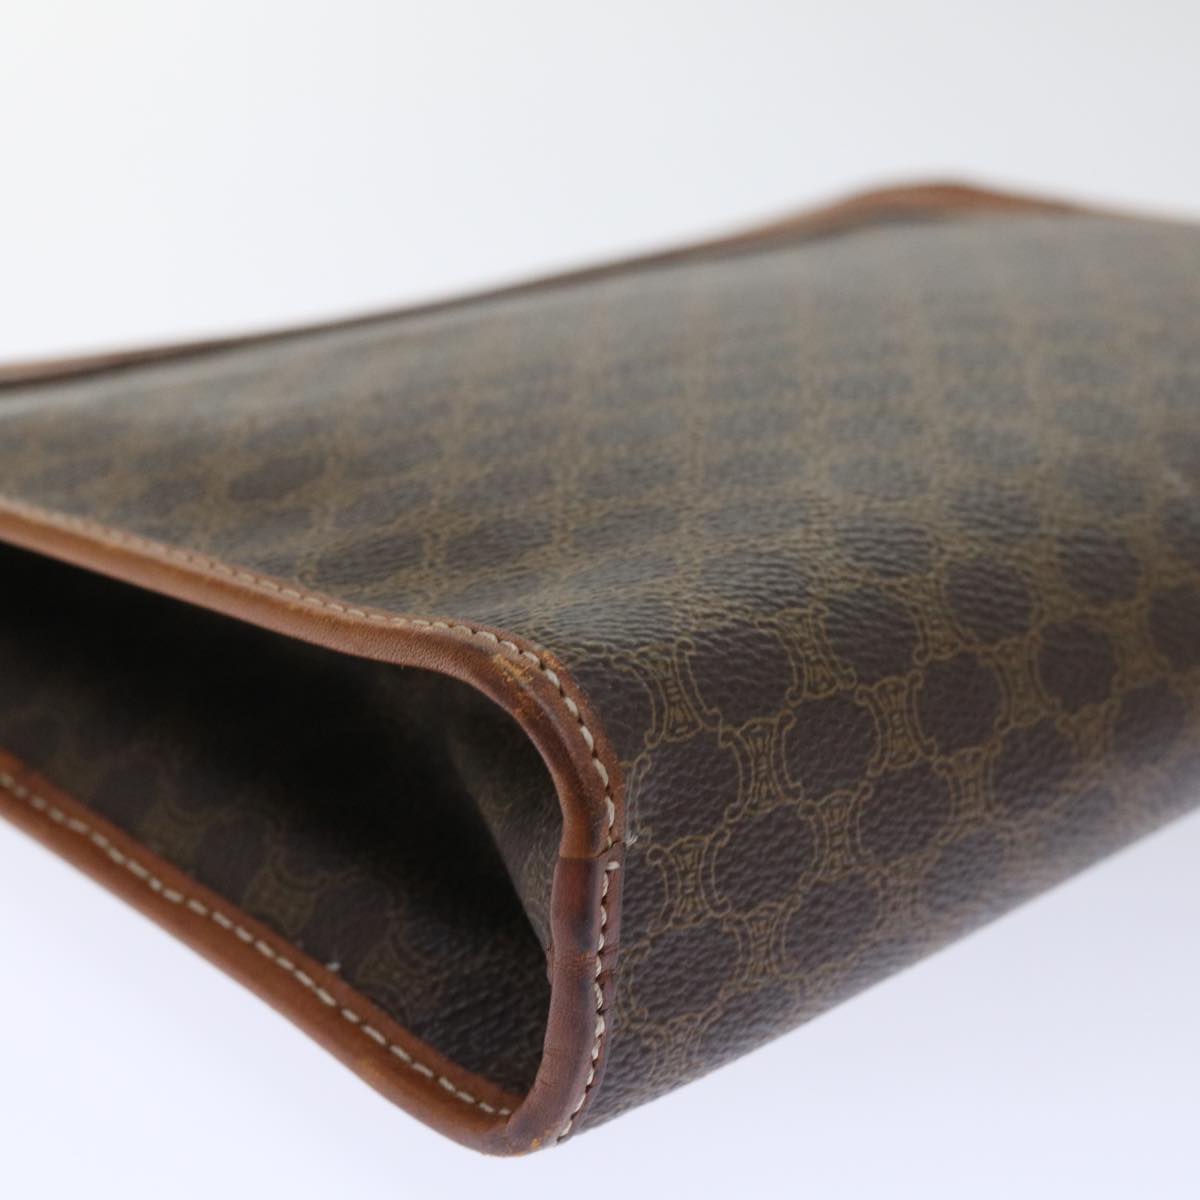 CELINE Macadam Canvas Clutch Bag PVC Leather Brown Auth 50615